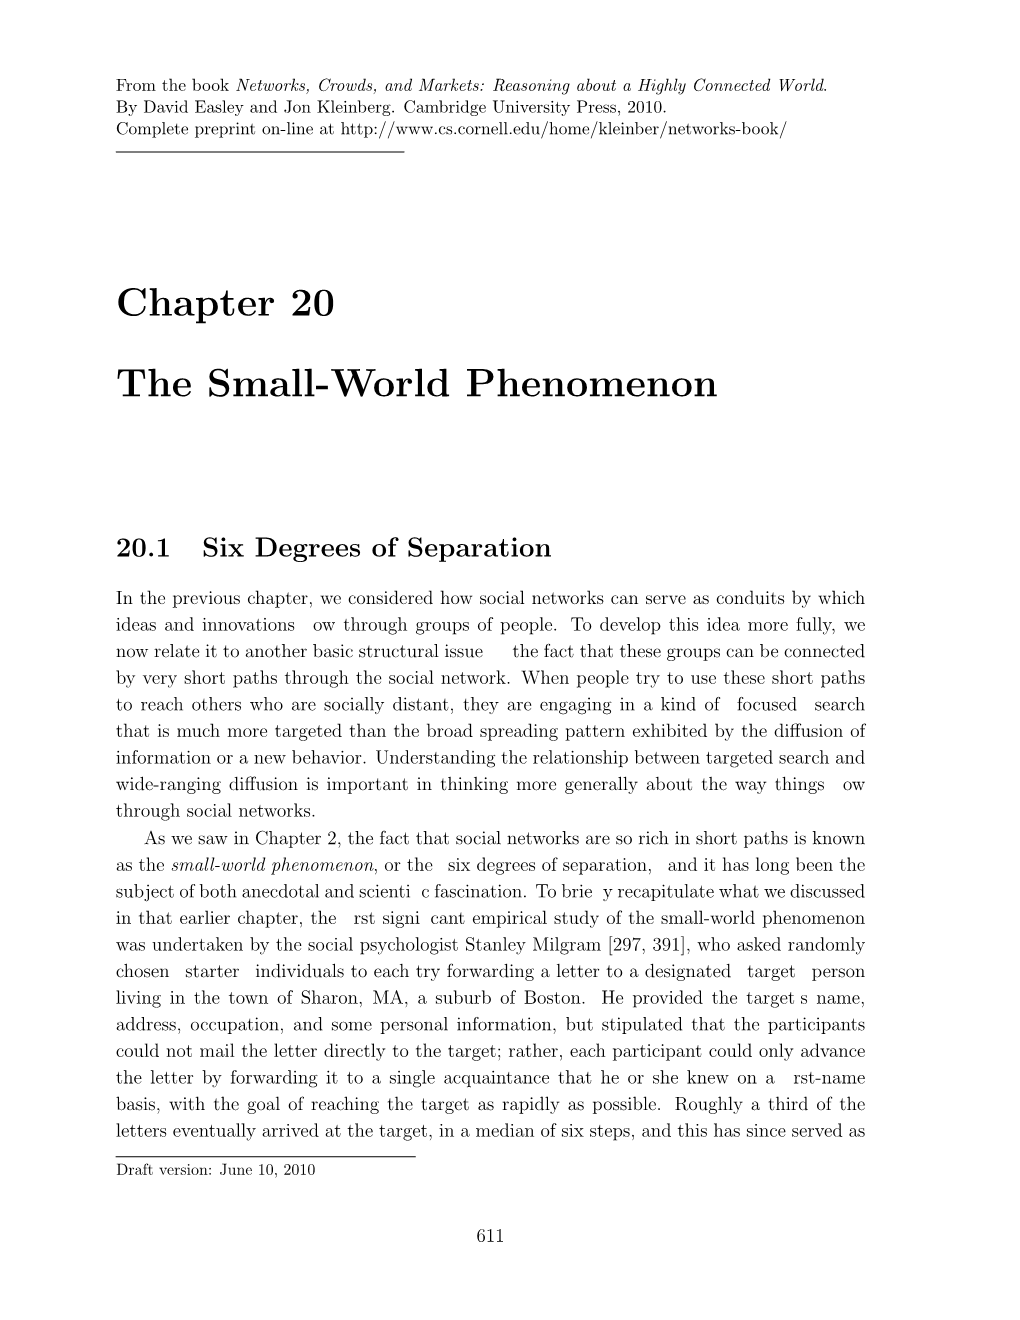 Chapter 20 the Small-World Phenomenon